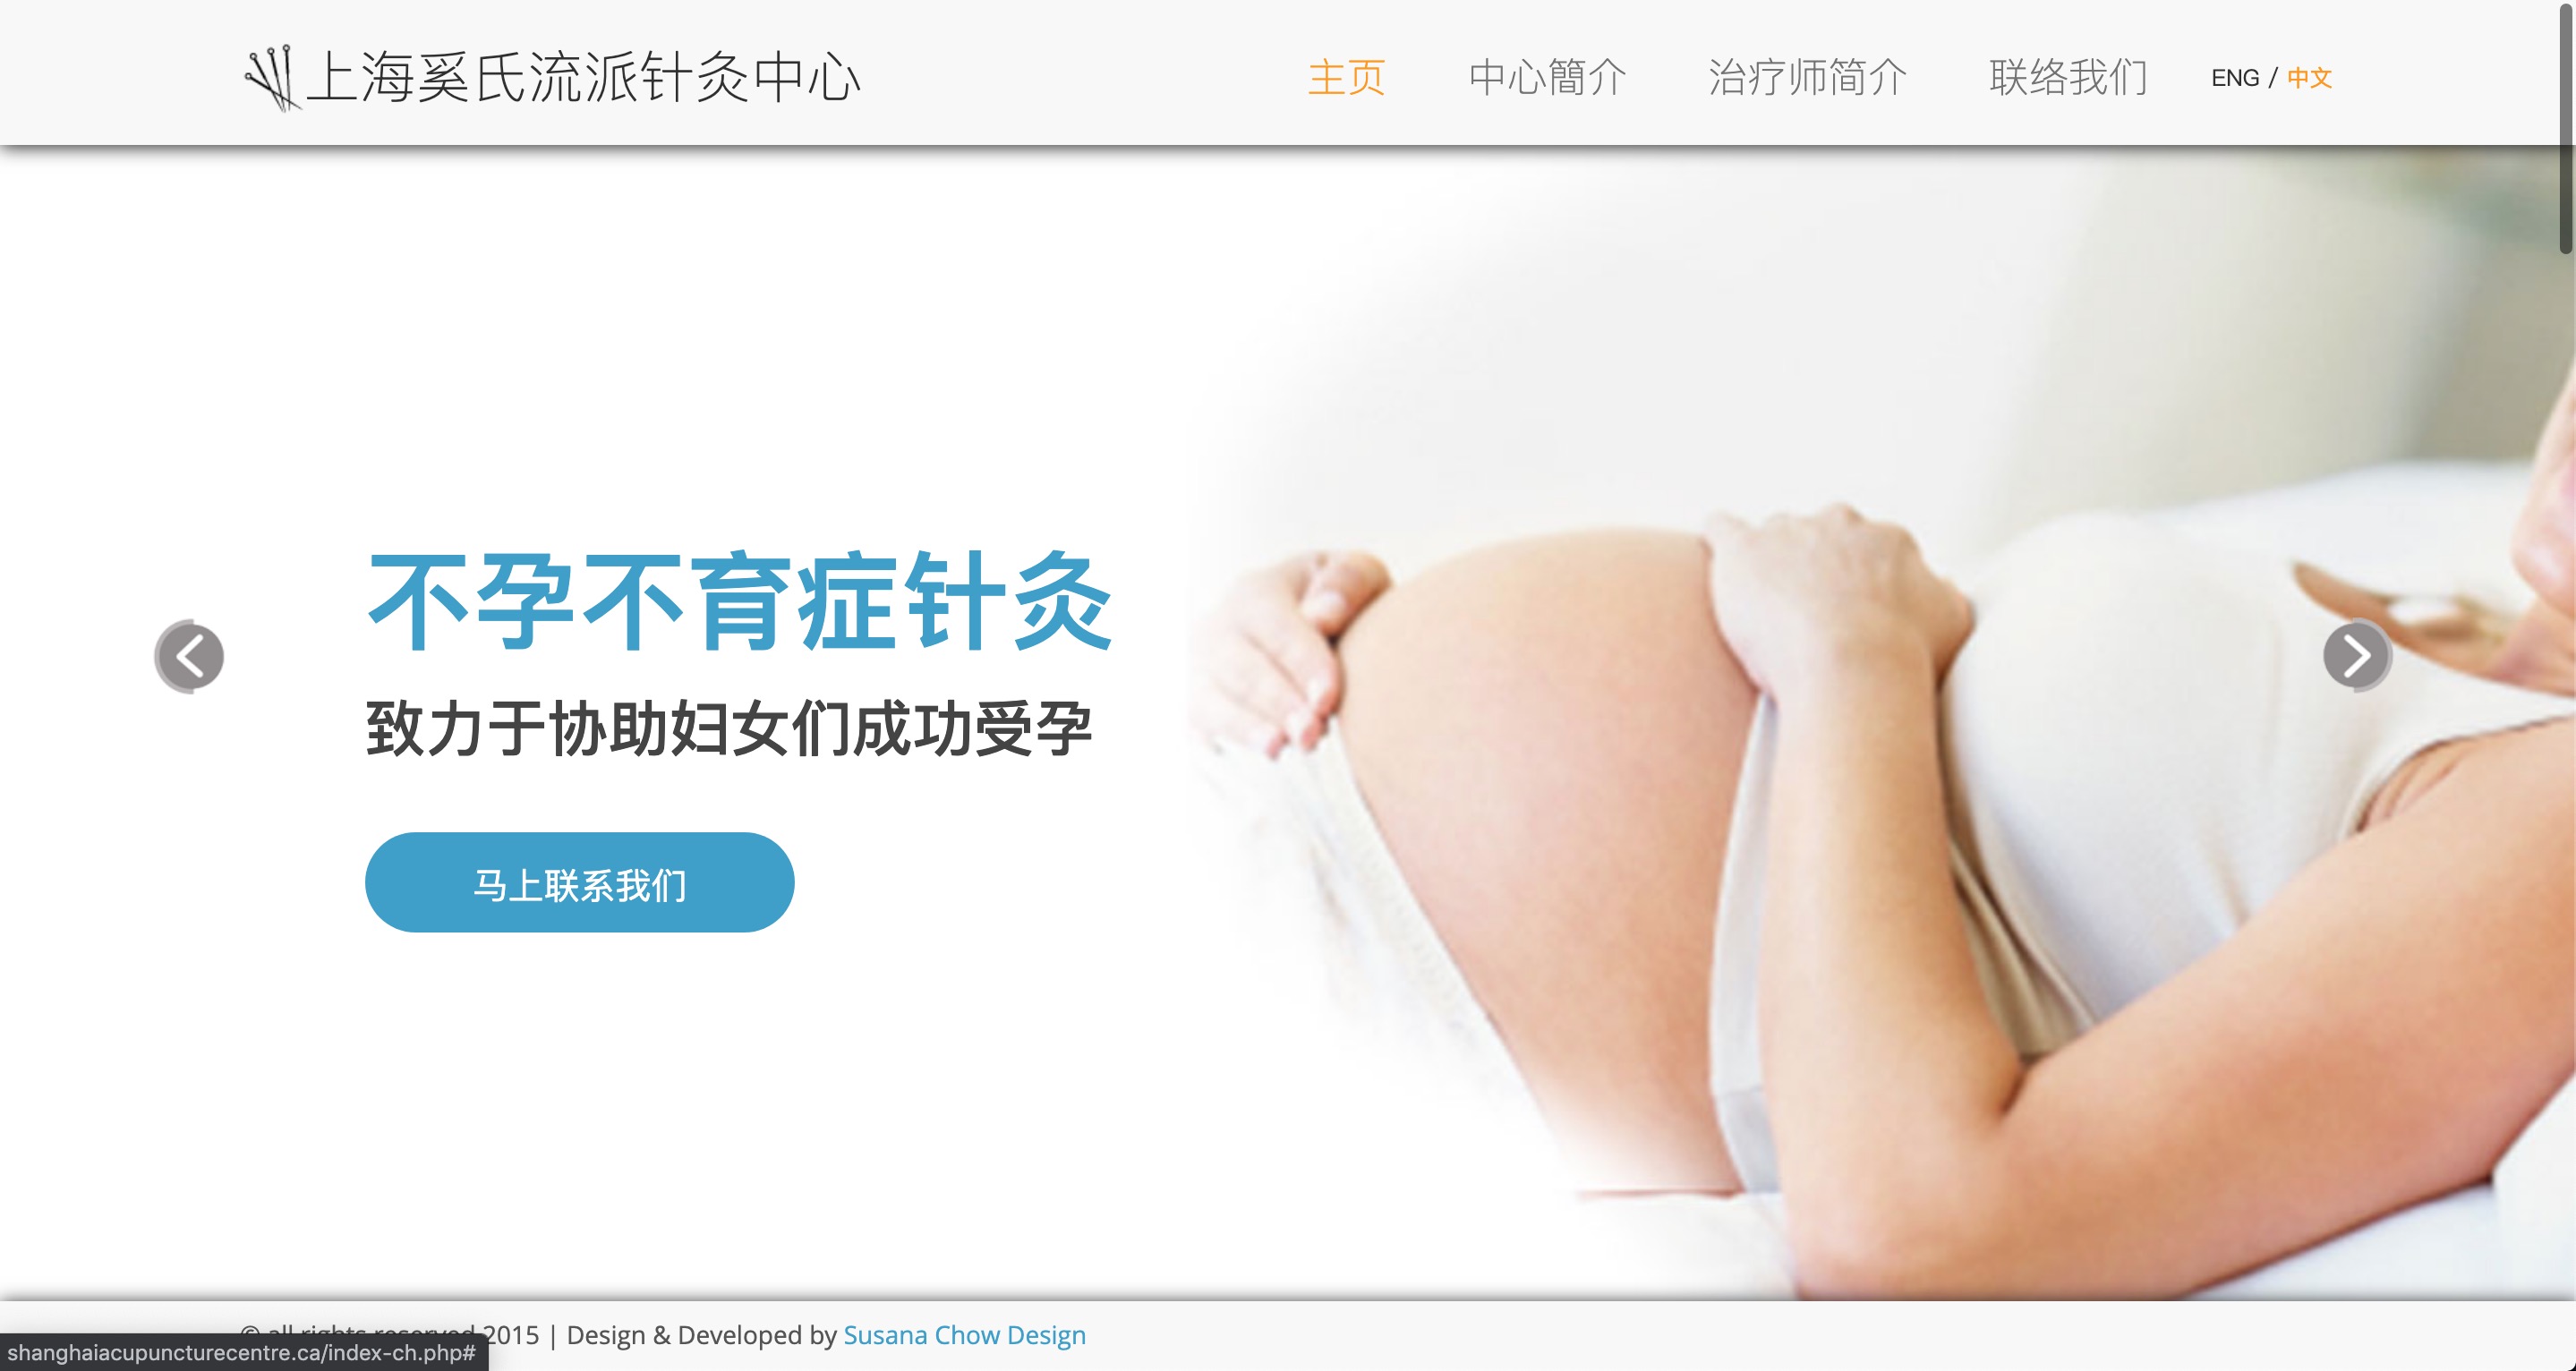 Shanghai Acupuncture Centre web